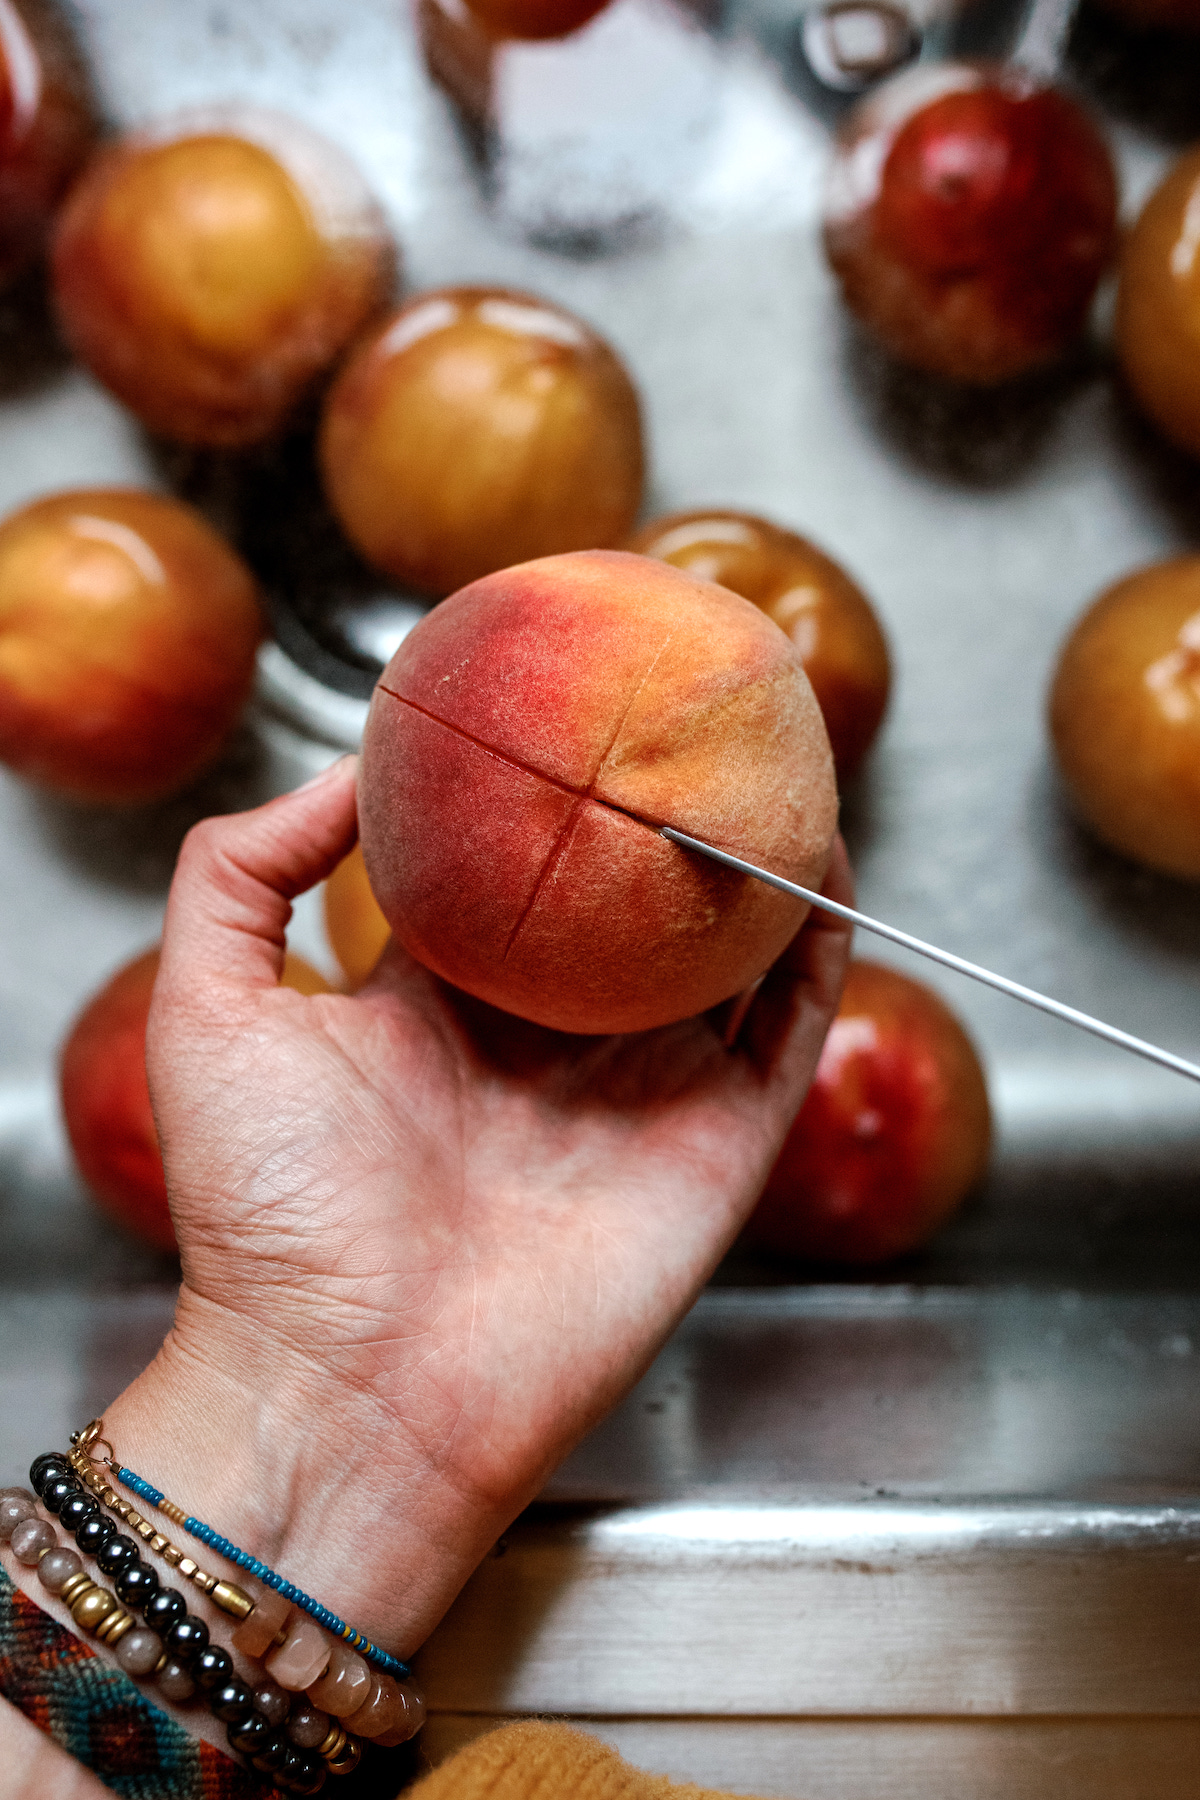 Scoring Peaches Before Peeling